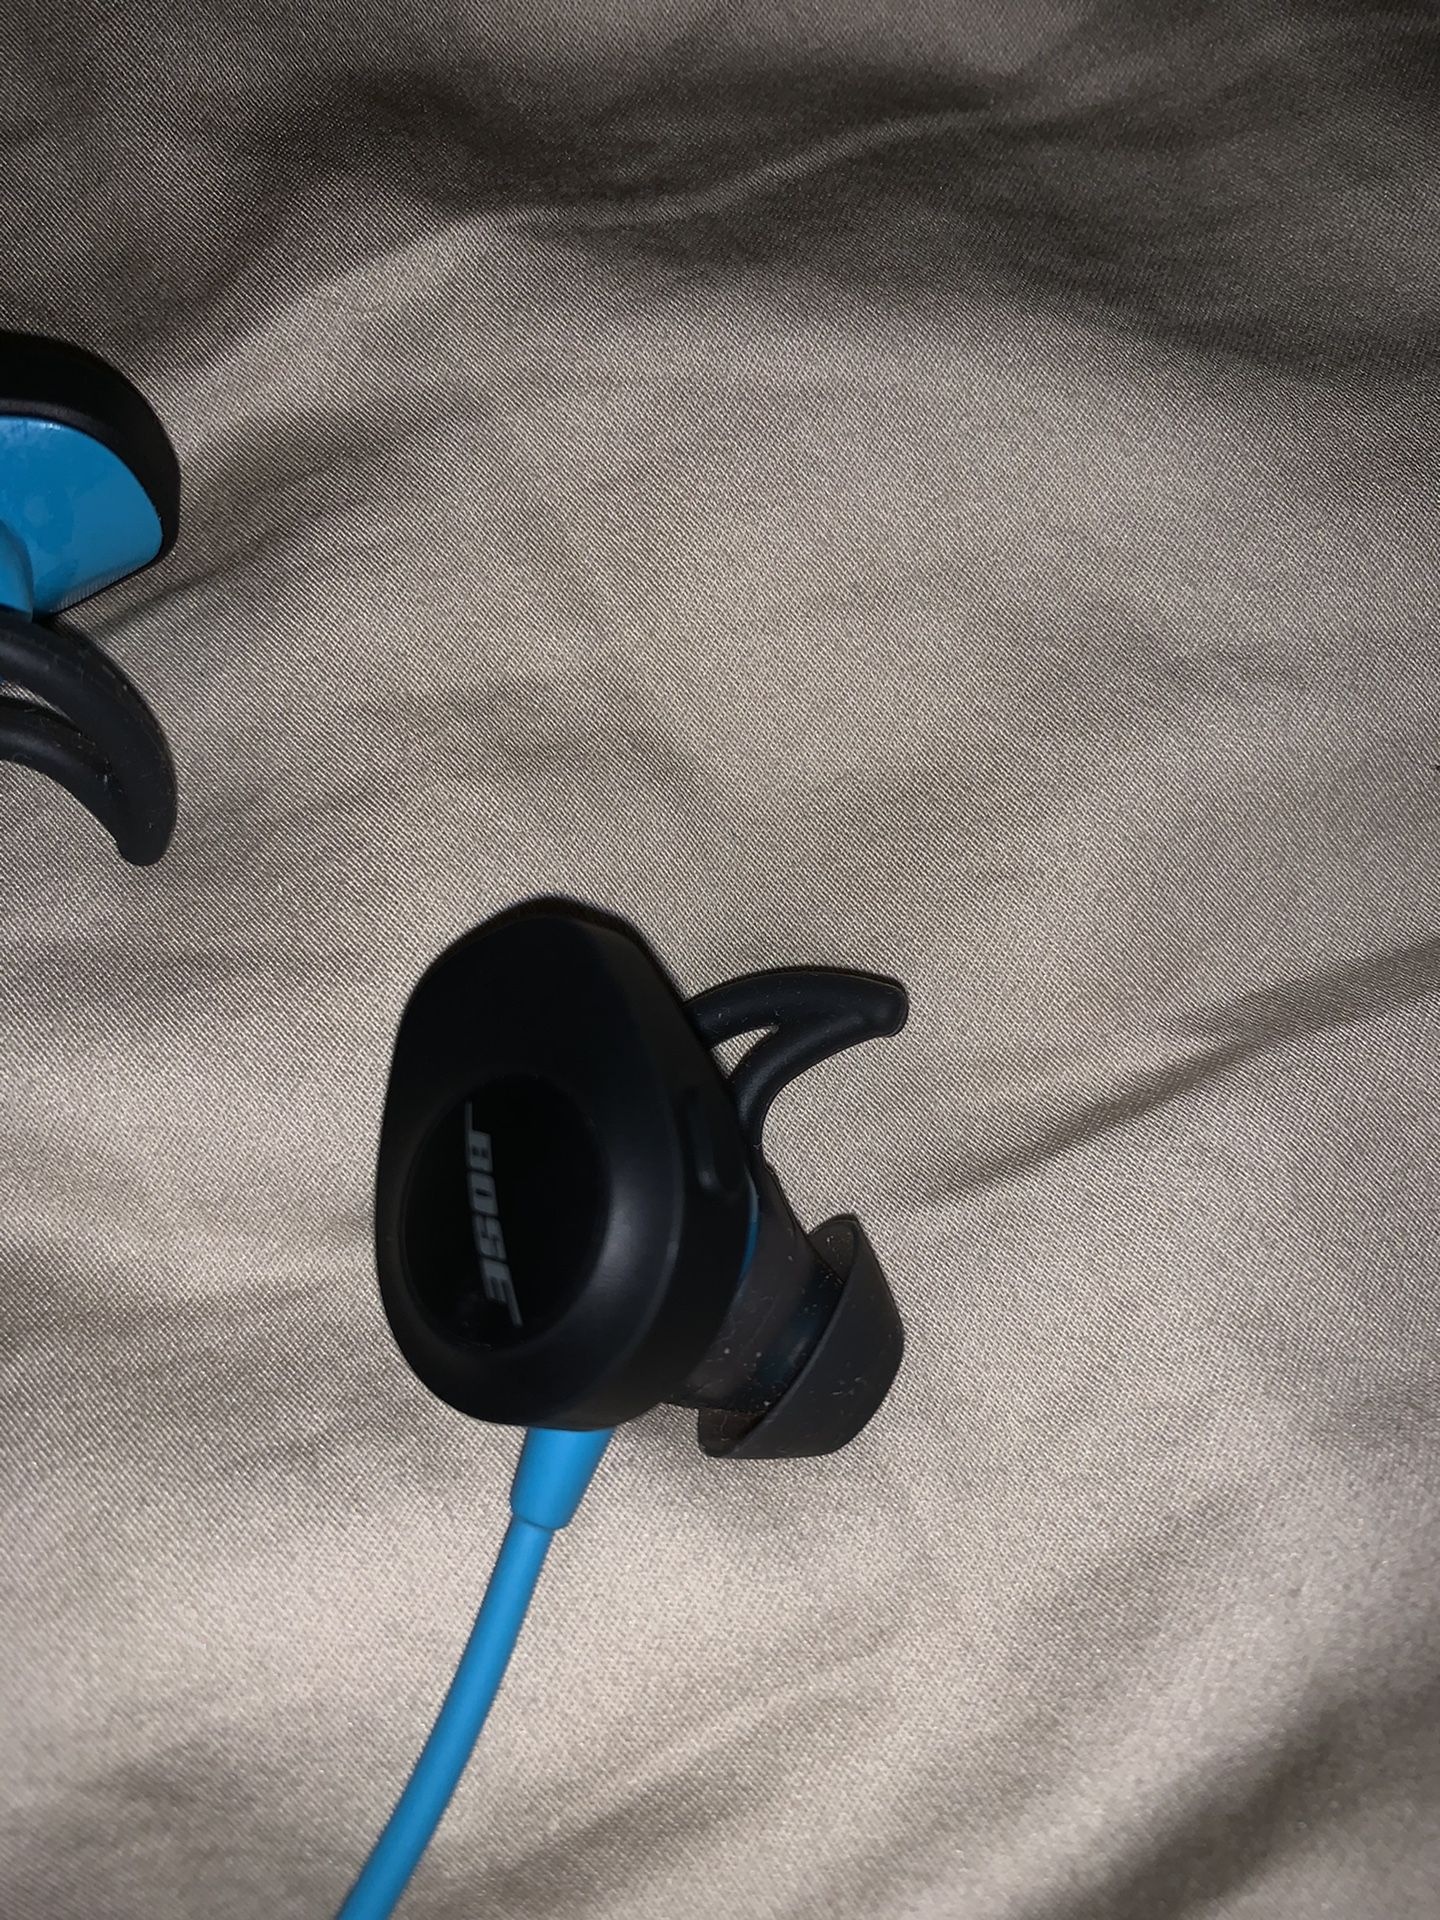 Bose wireless headphones